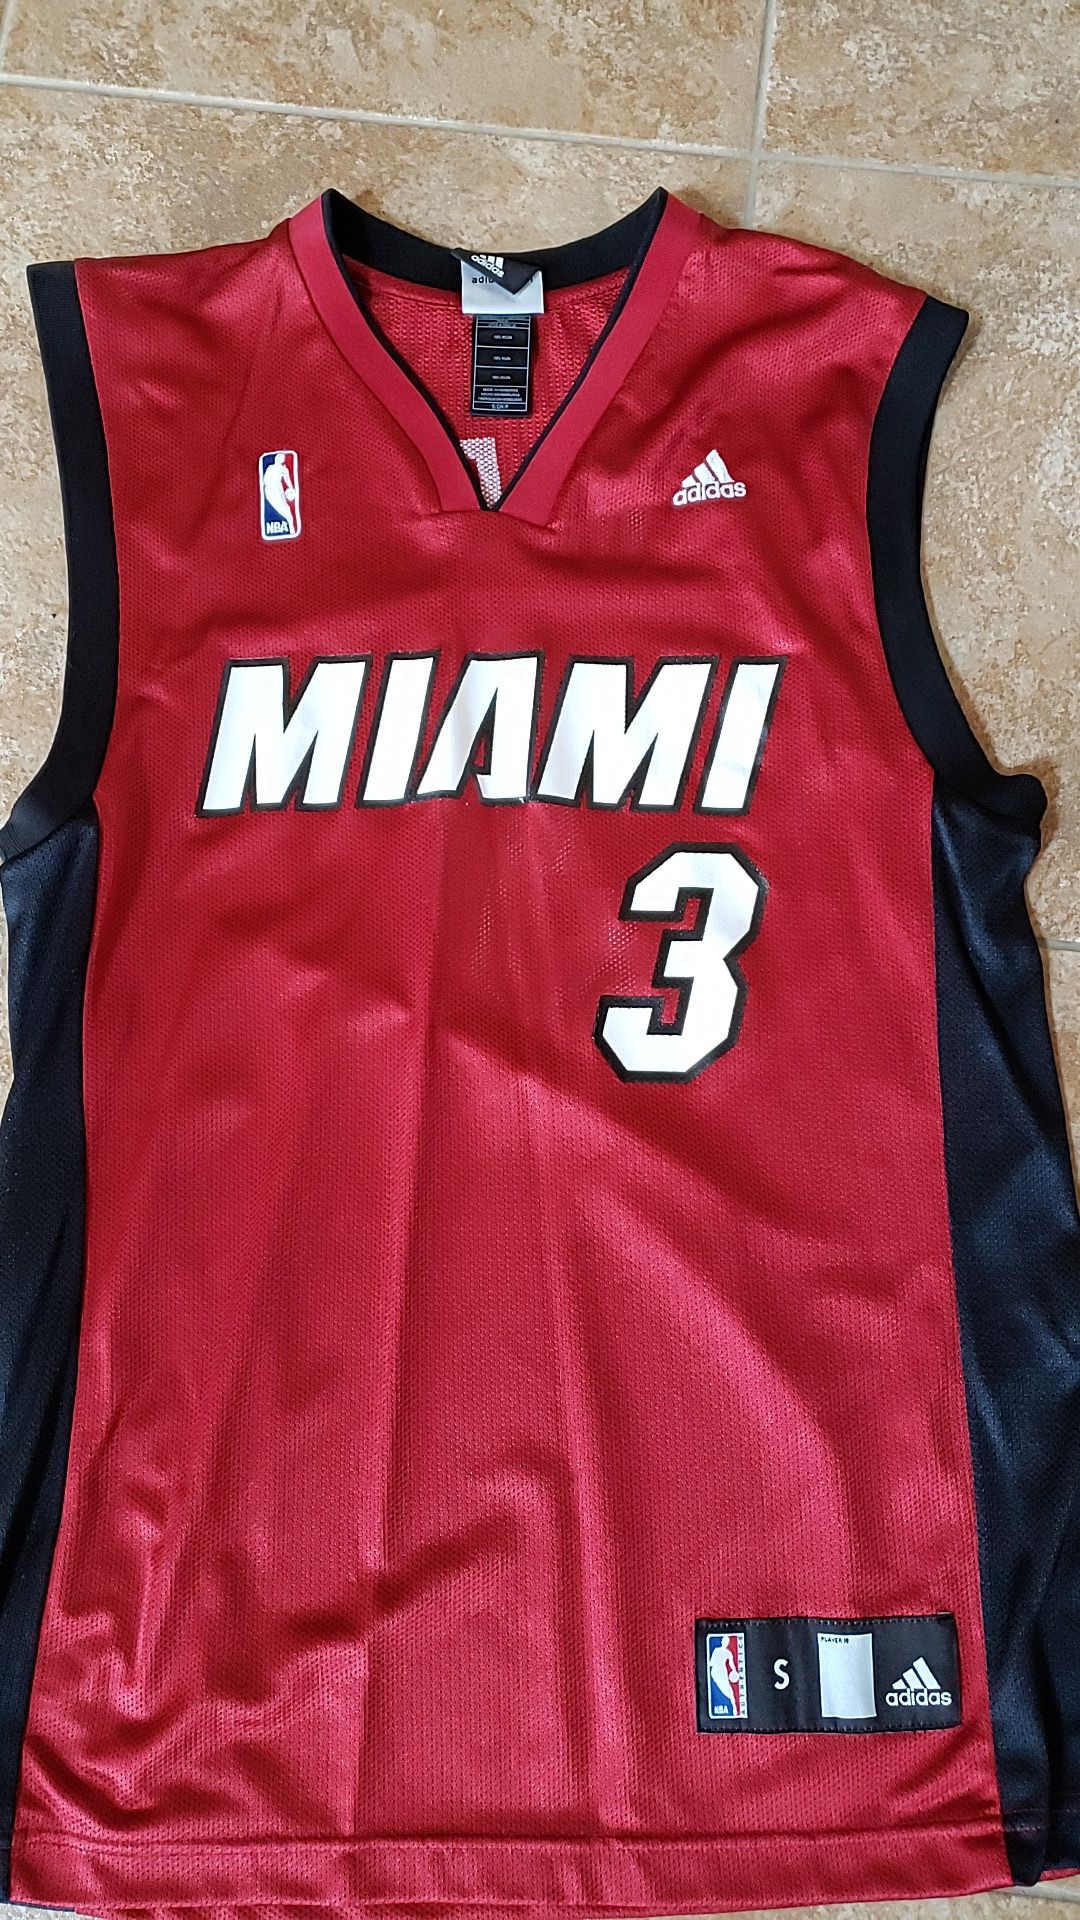 Dwyane Wade Miami Heat jersey